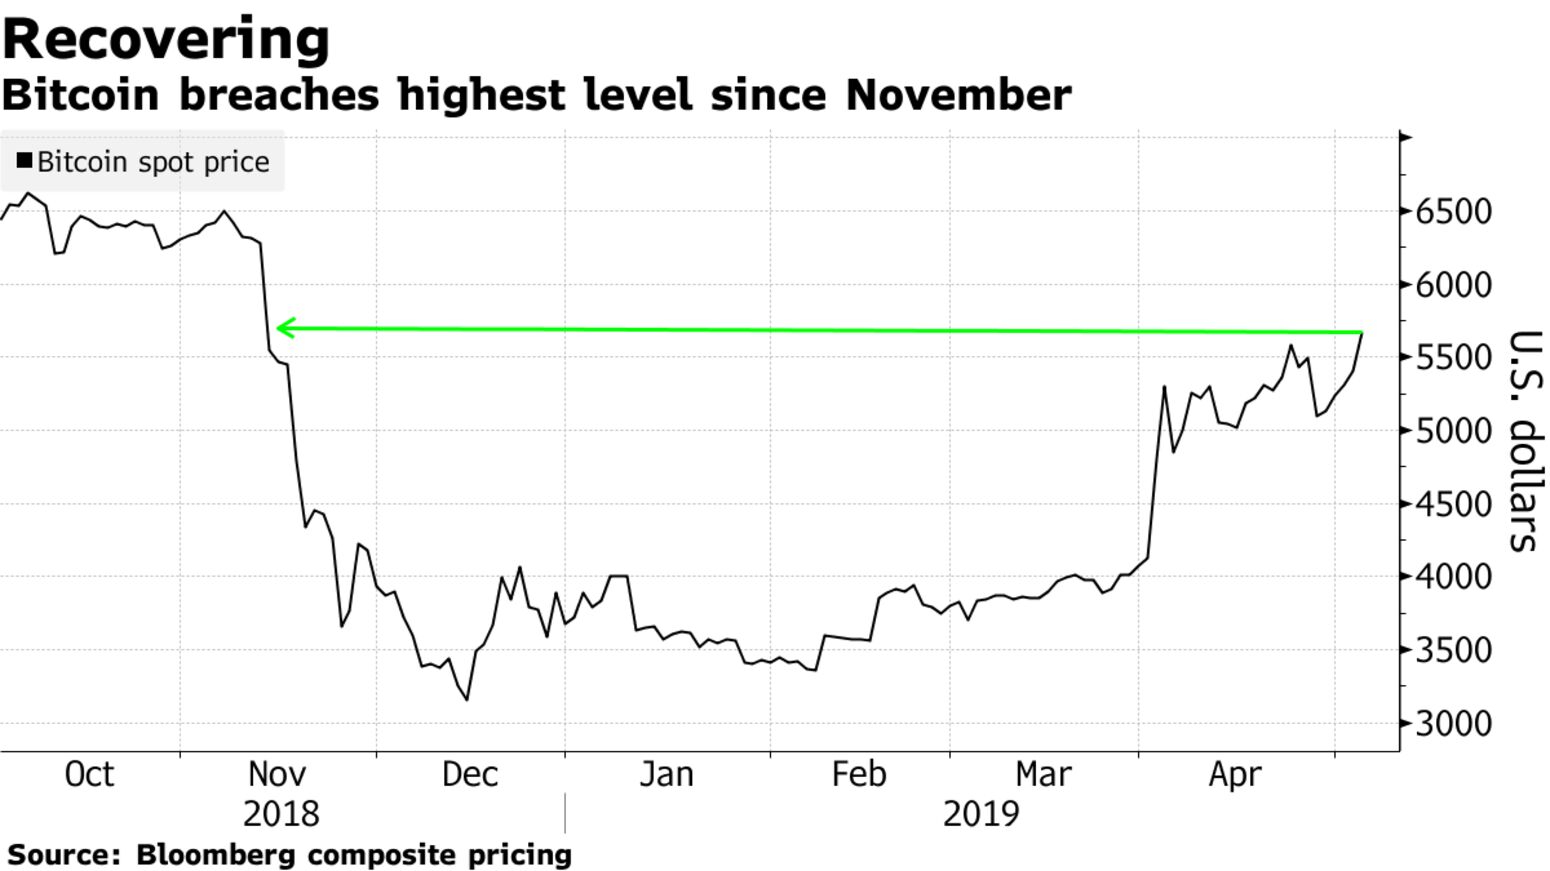 Bitcoin breaches highest level since November